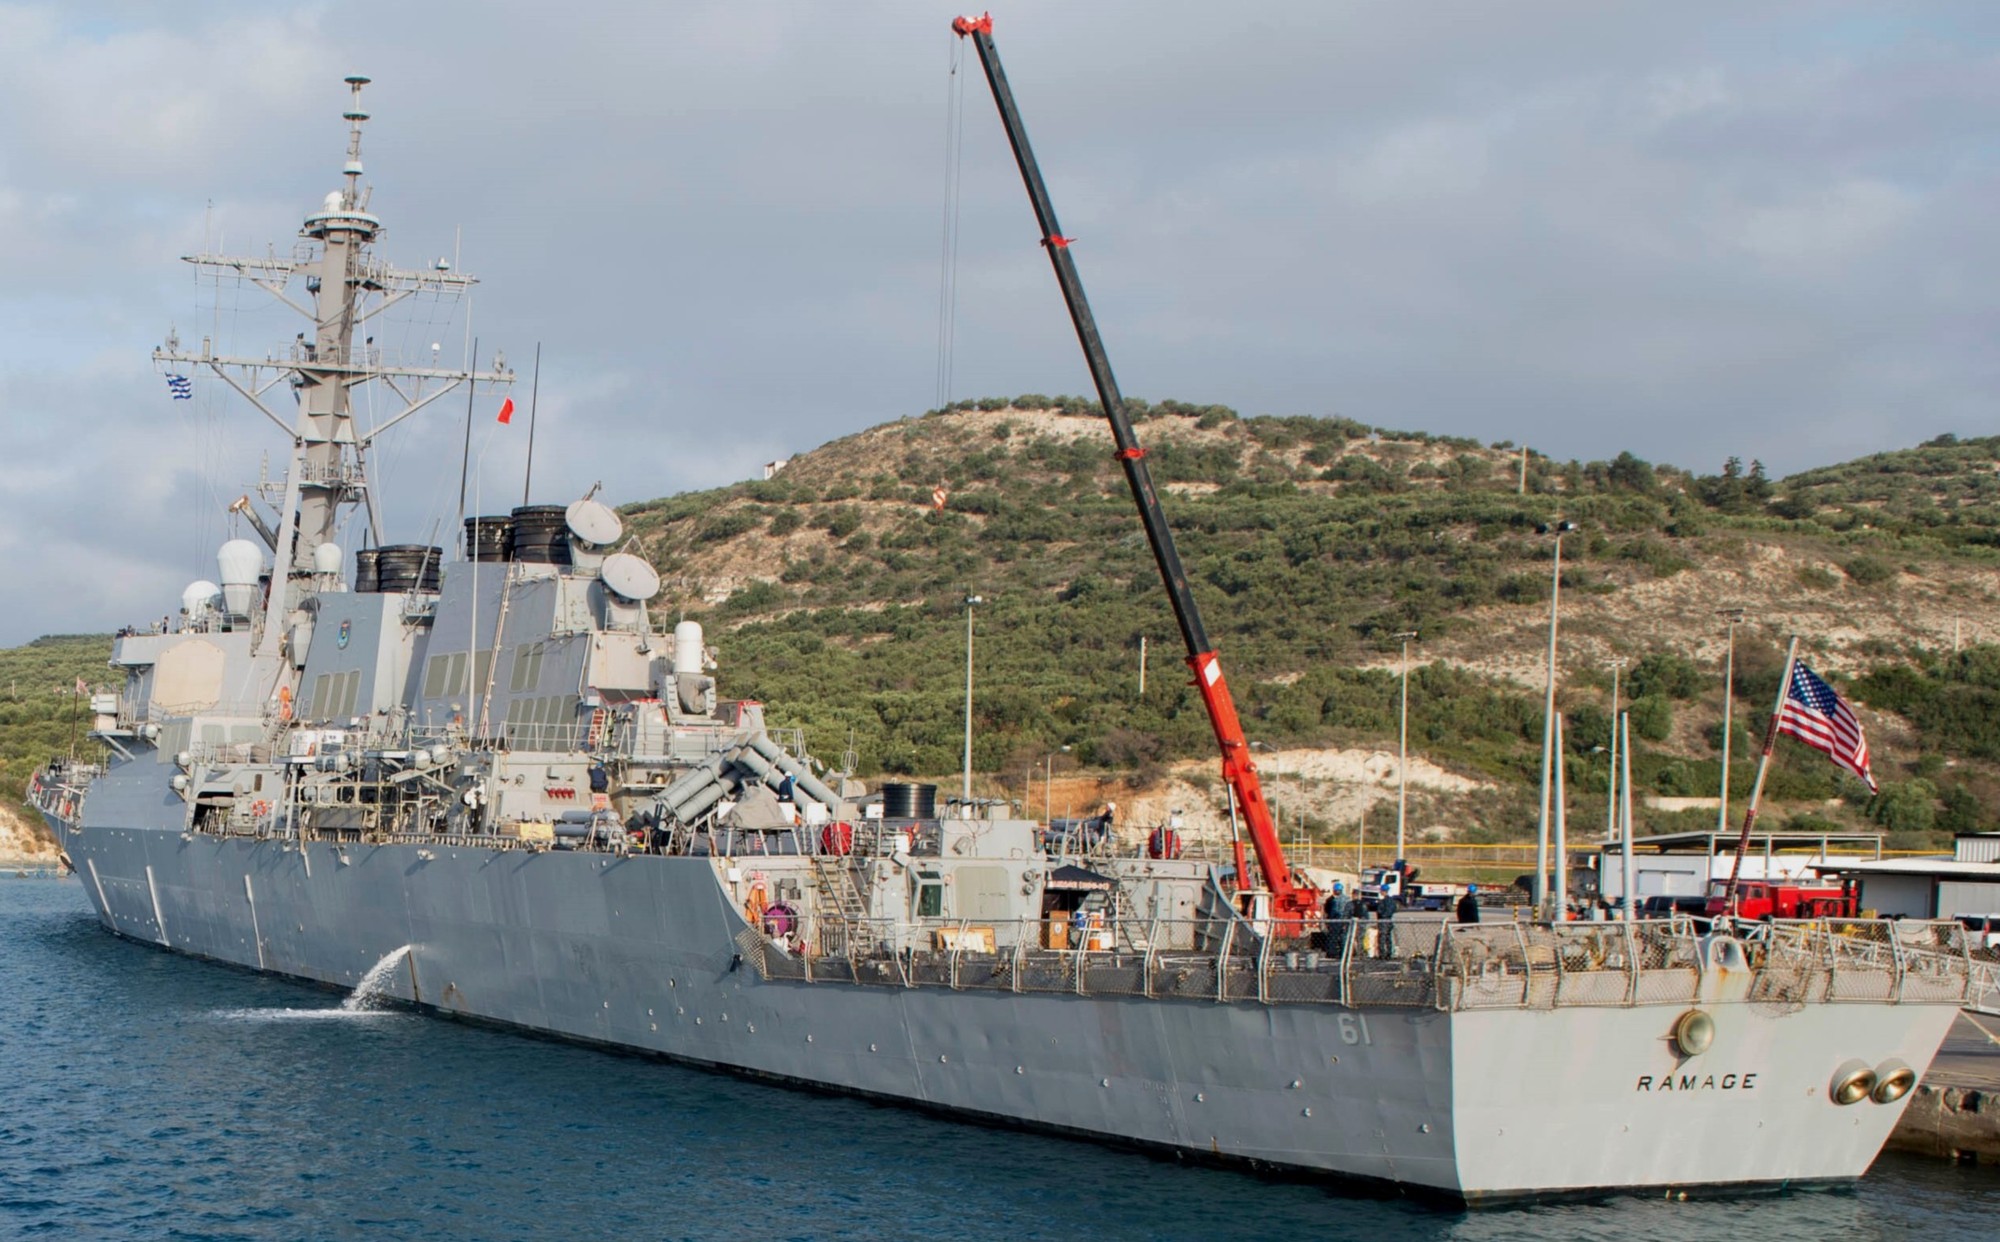 ddg-61 uss ramage guided missile destroyer arleigh burke class aegis us navy souda bay greece 26